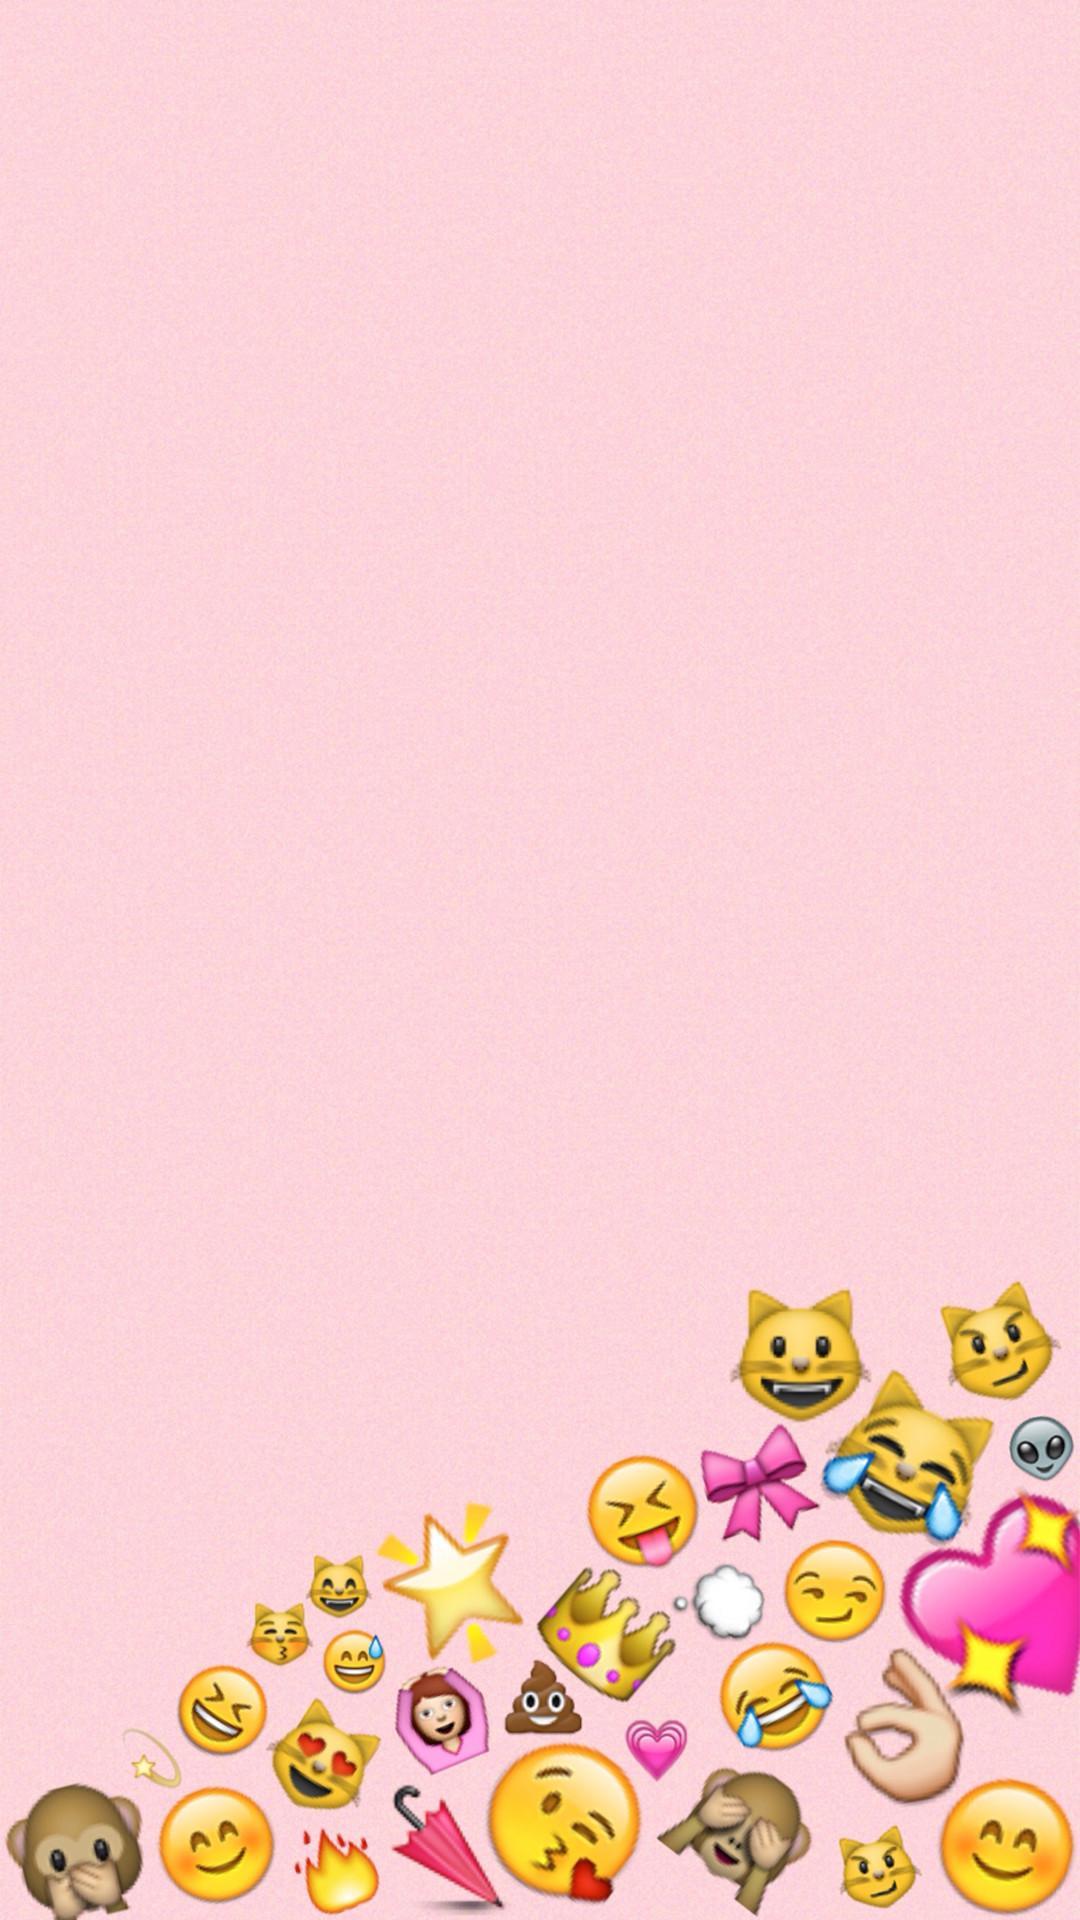 45+] Emoji iPhone Wallpapers